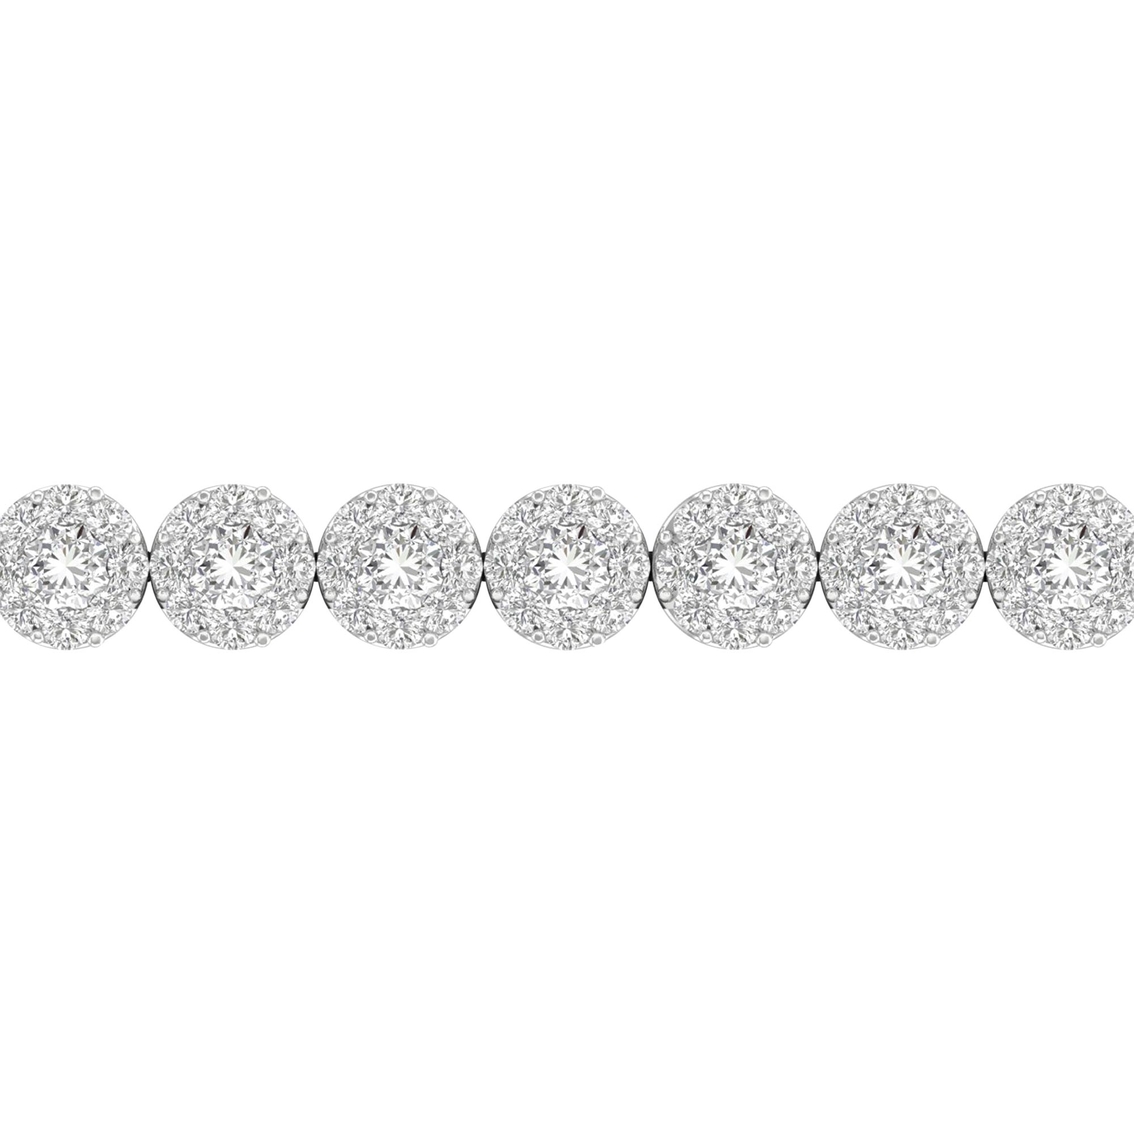 Endless Diamonds 14K White Gold 1 CTW Diamond Endless Fashion Bracelet - Image 2 of 2